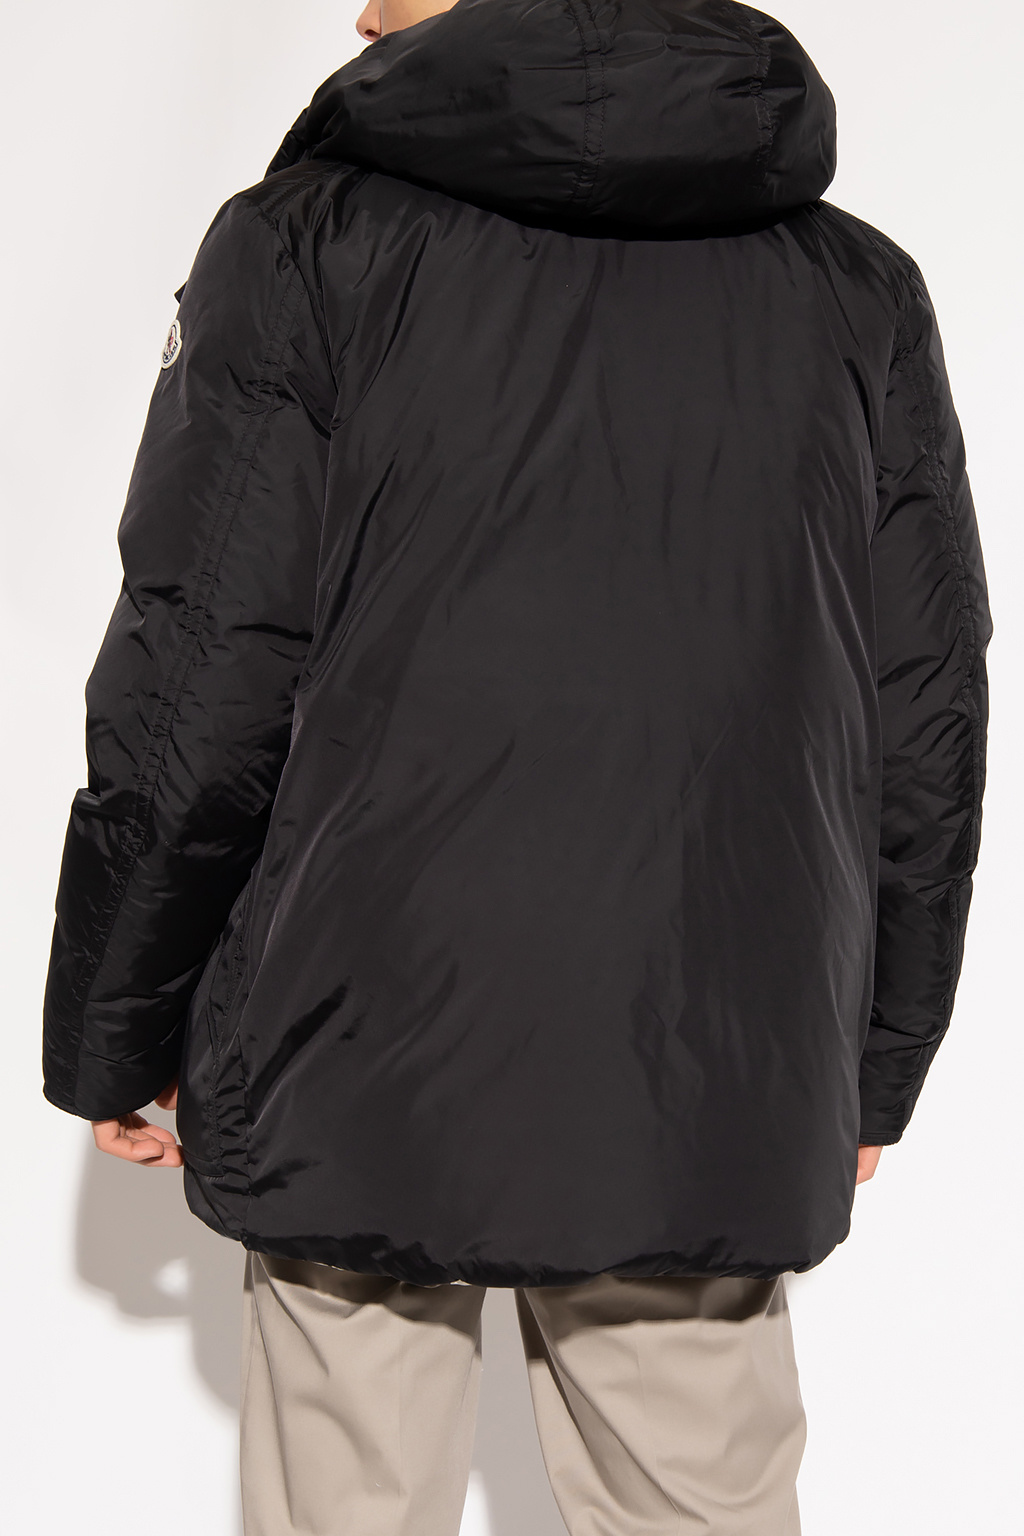 Moncler ‘Hordelyme’ reversible Vitt jacket